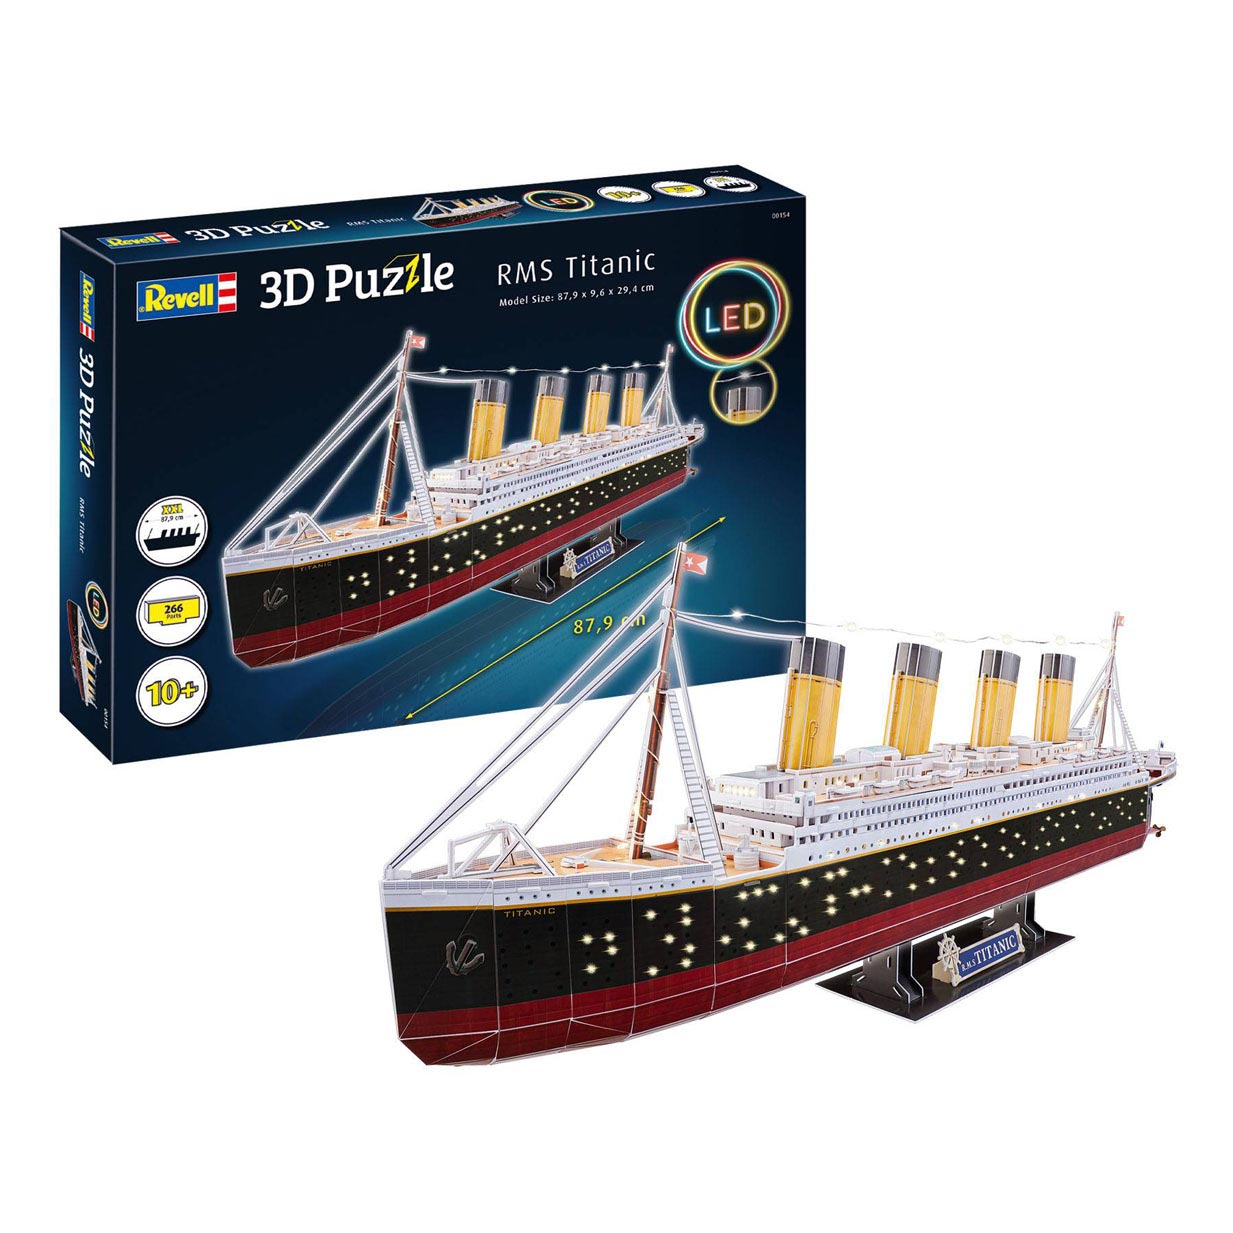 Revell 3D Puzzle Building - RMS Titanic LED Edition | Thimble Toys